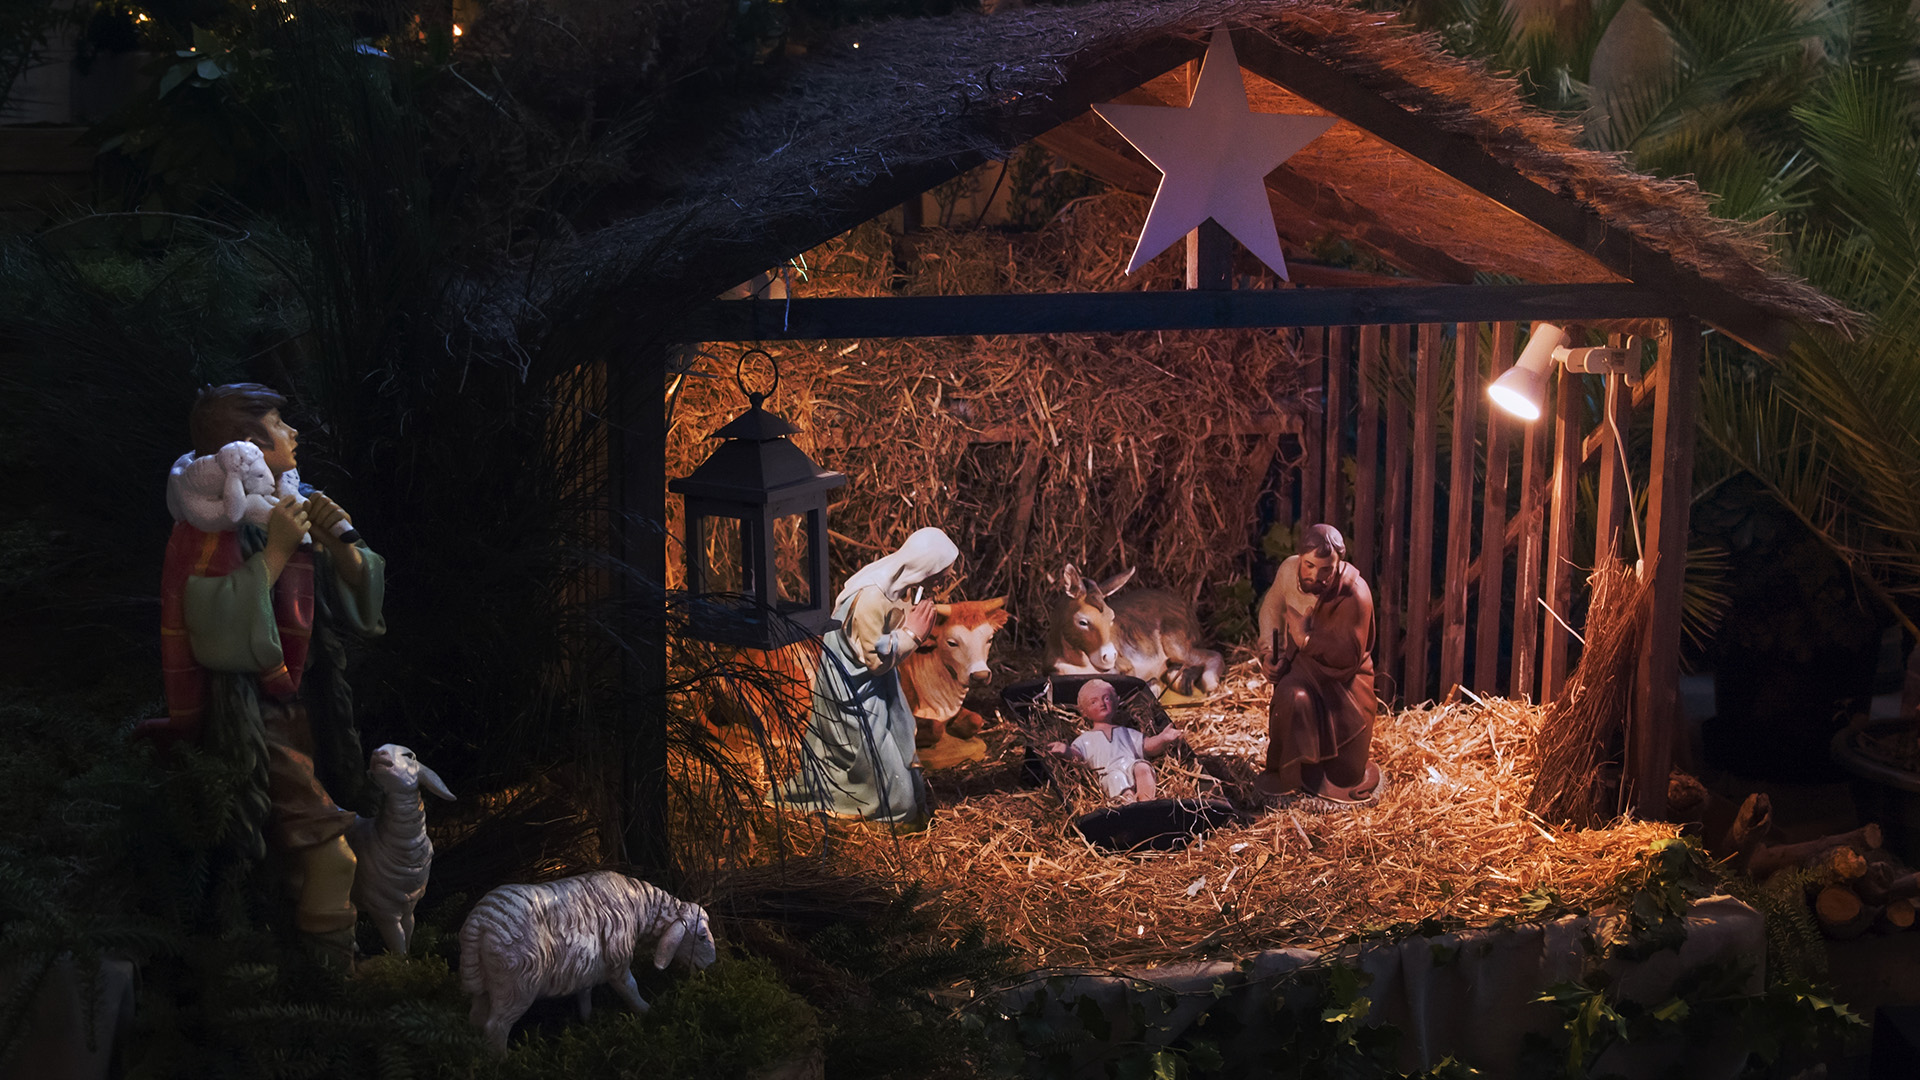 A nativity scene